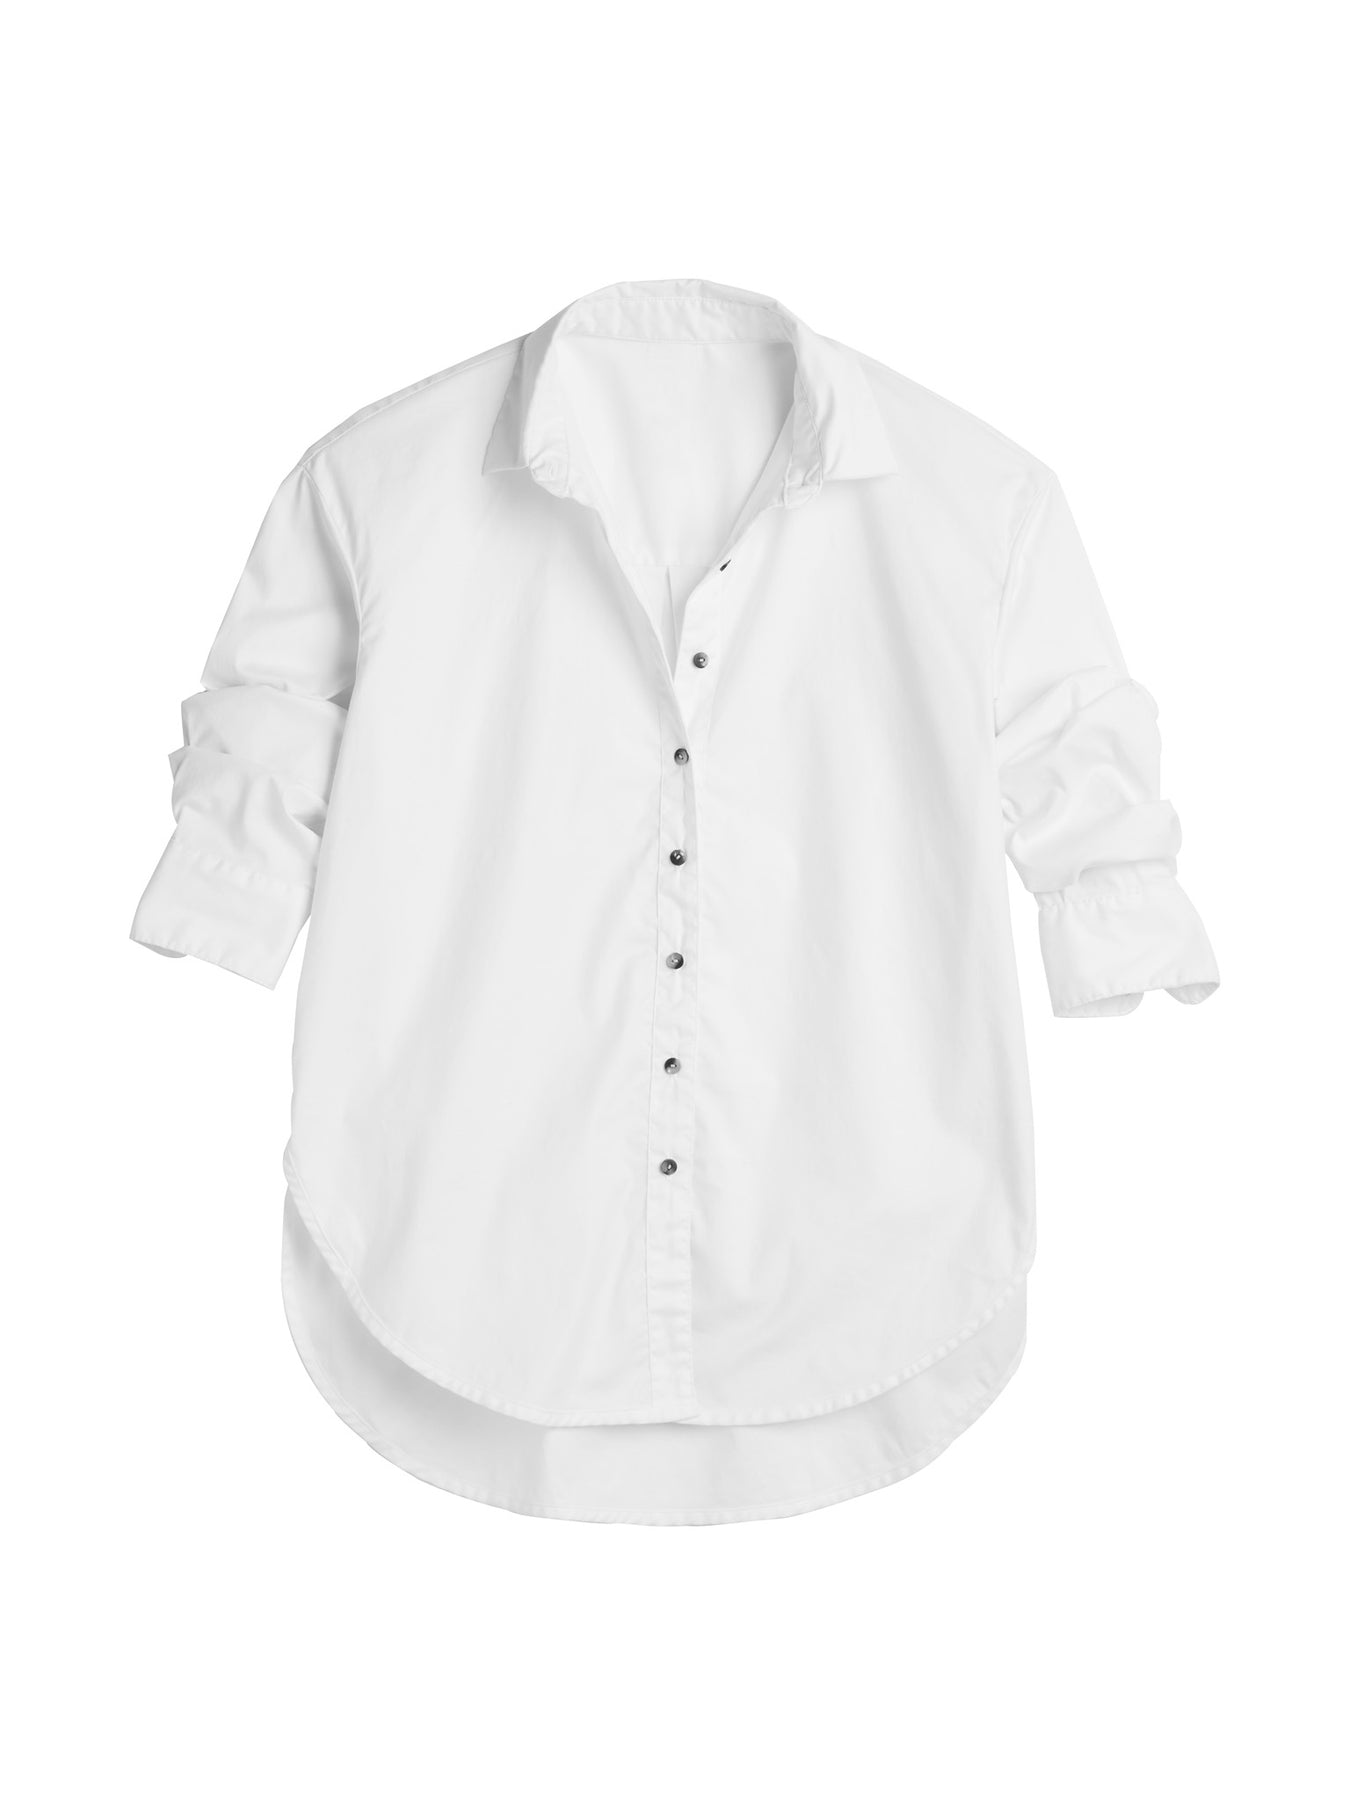 Fancy White Shirt For Women 